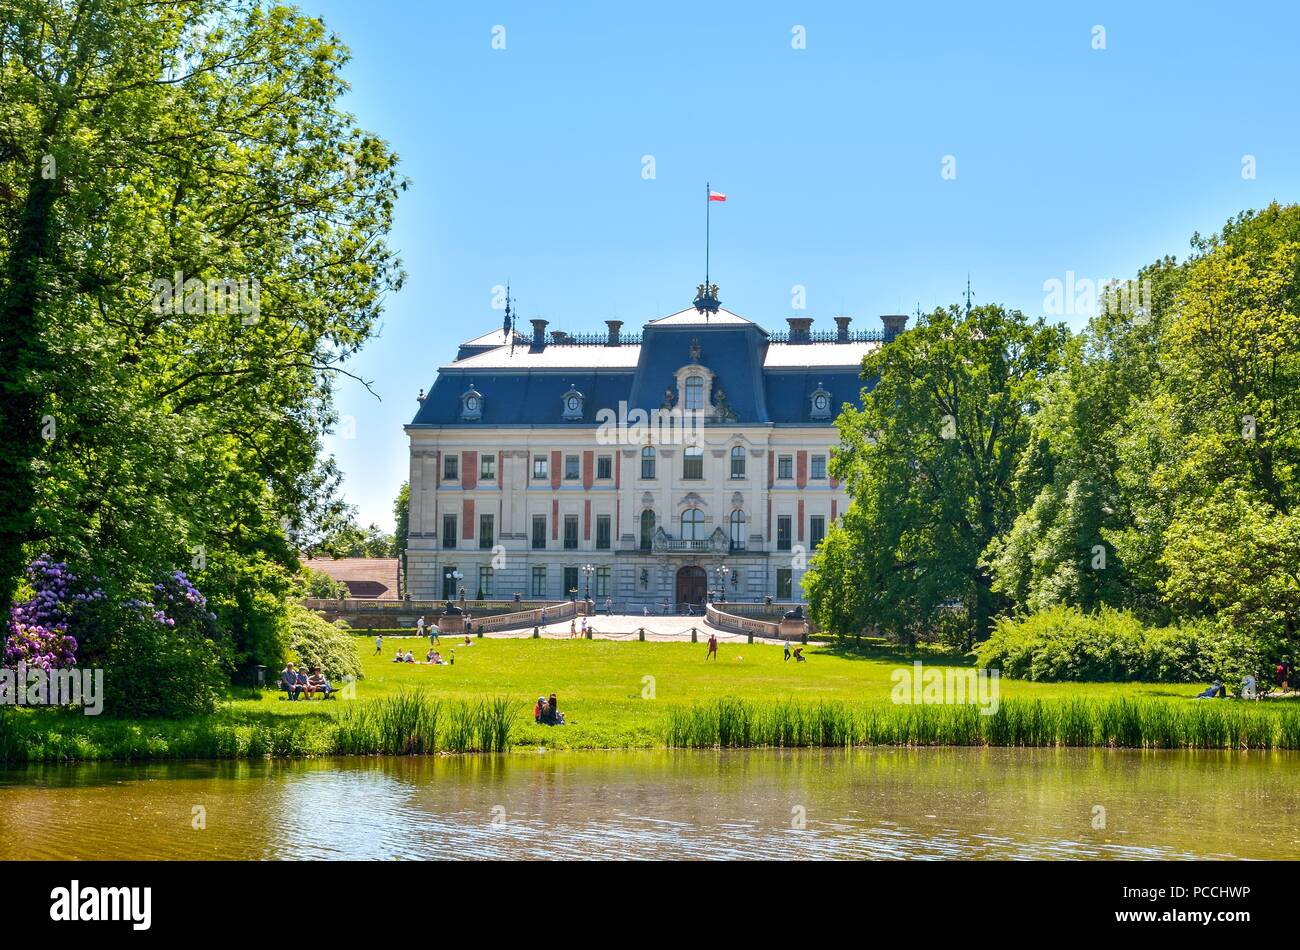 PSZCZYNA, POLAND - MAY 13, 2018: Beautiful antique neo baroque castle in Pszczyna, Poland. Stock Photo